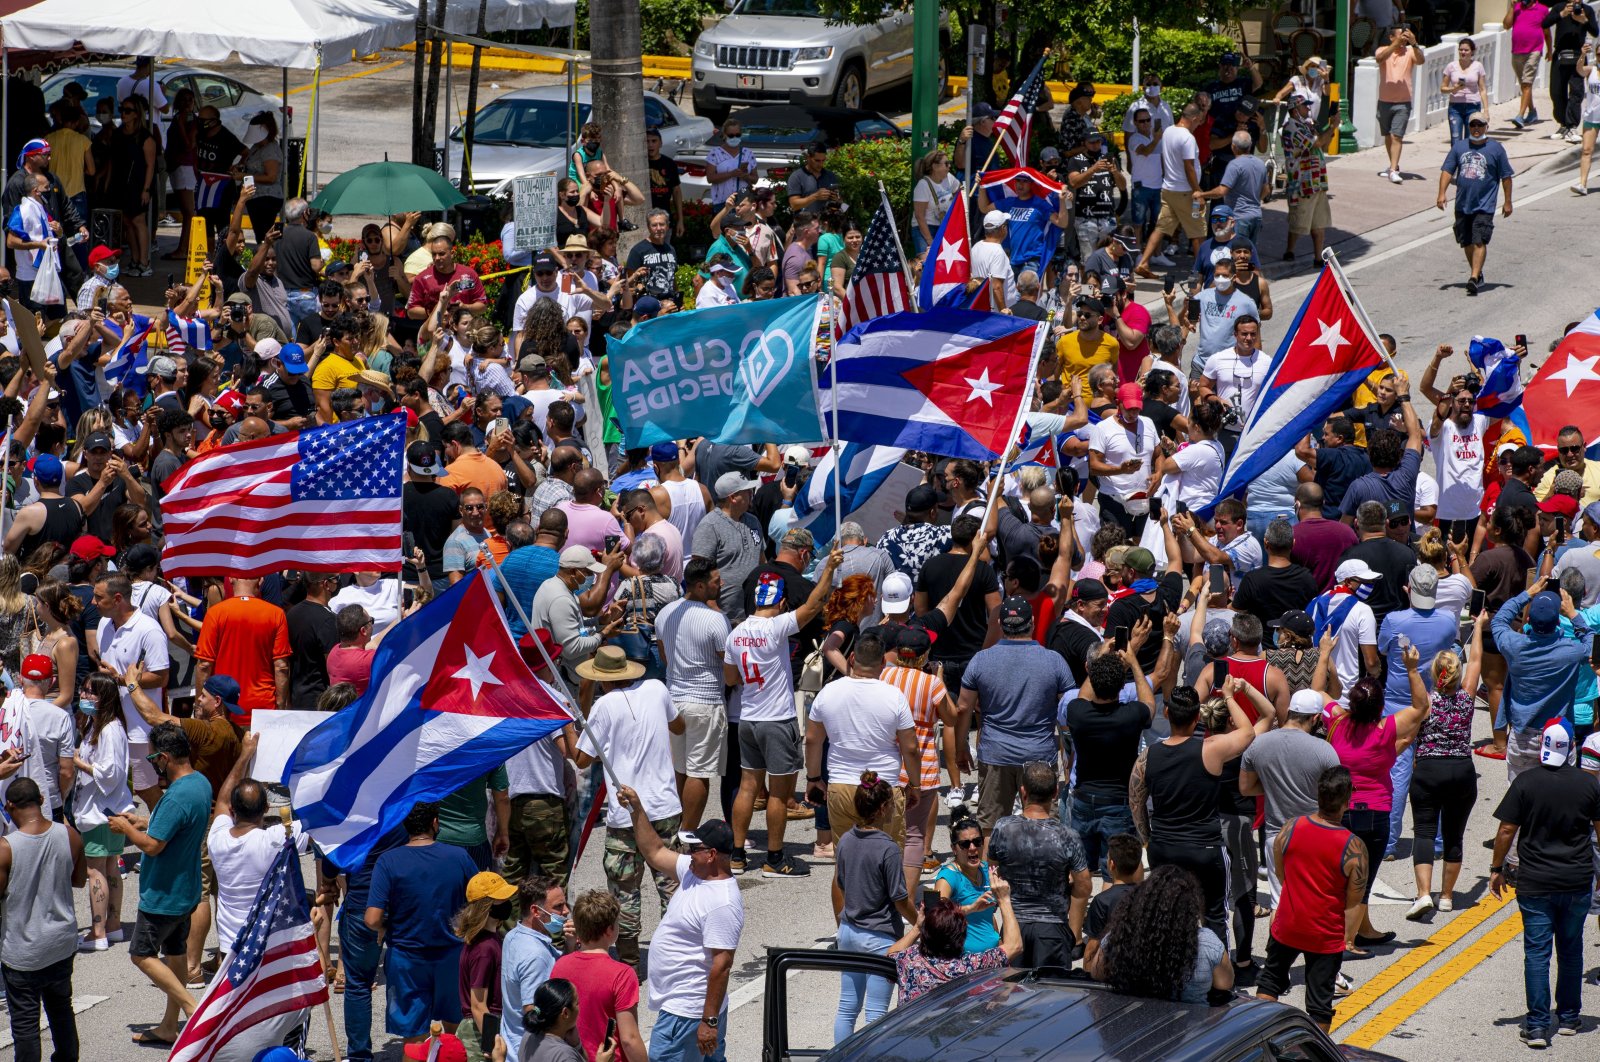 Joe Henderson Cuban demonstrations in Miami highlight flaws in anti